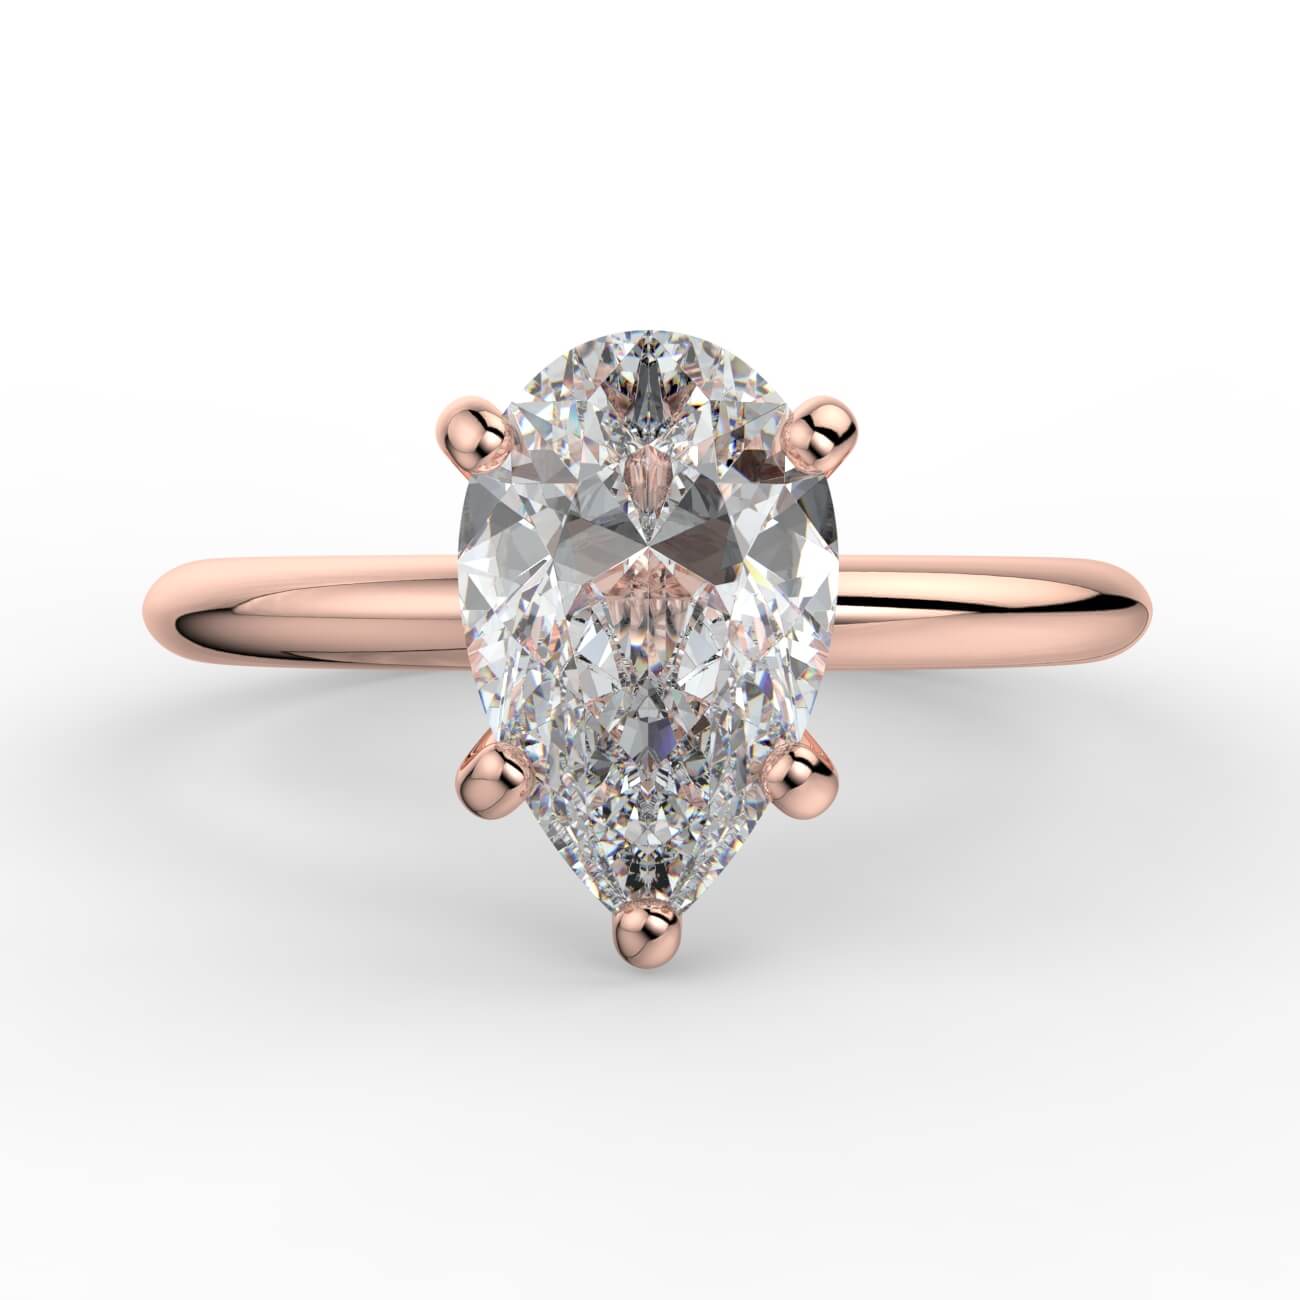 Solitaire pear shape diamond engagement ring in rose gold – Australian Diamond Network